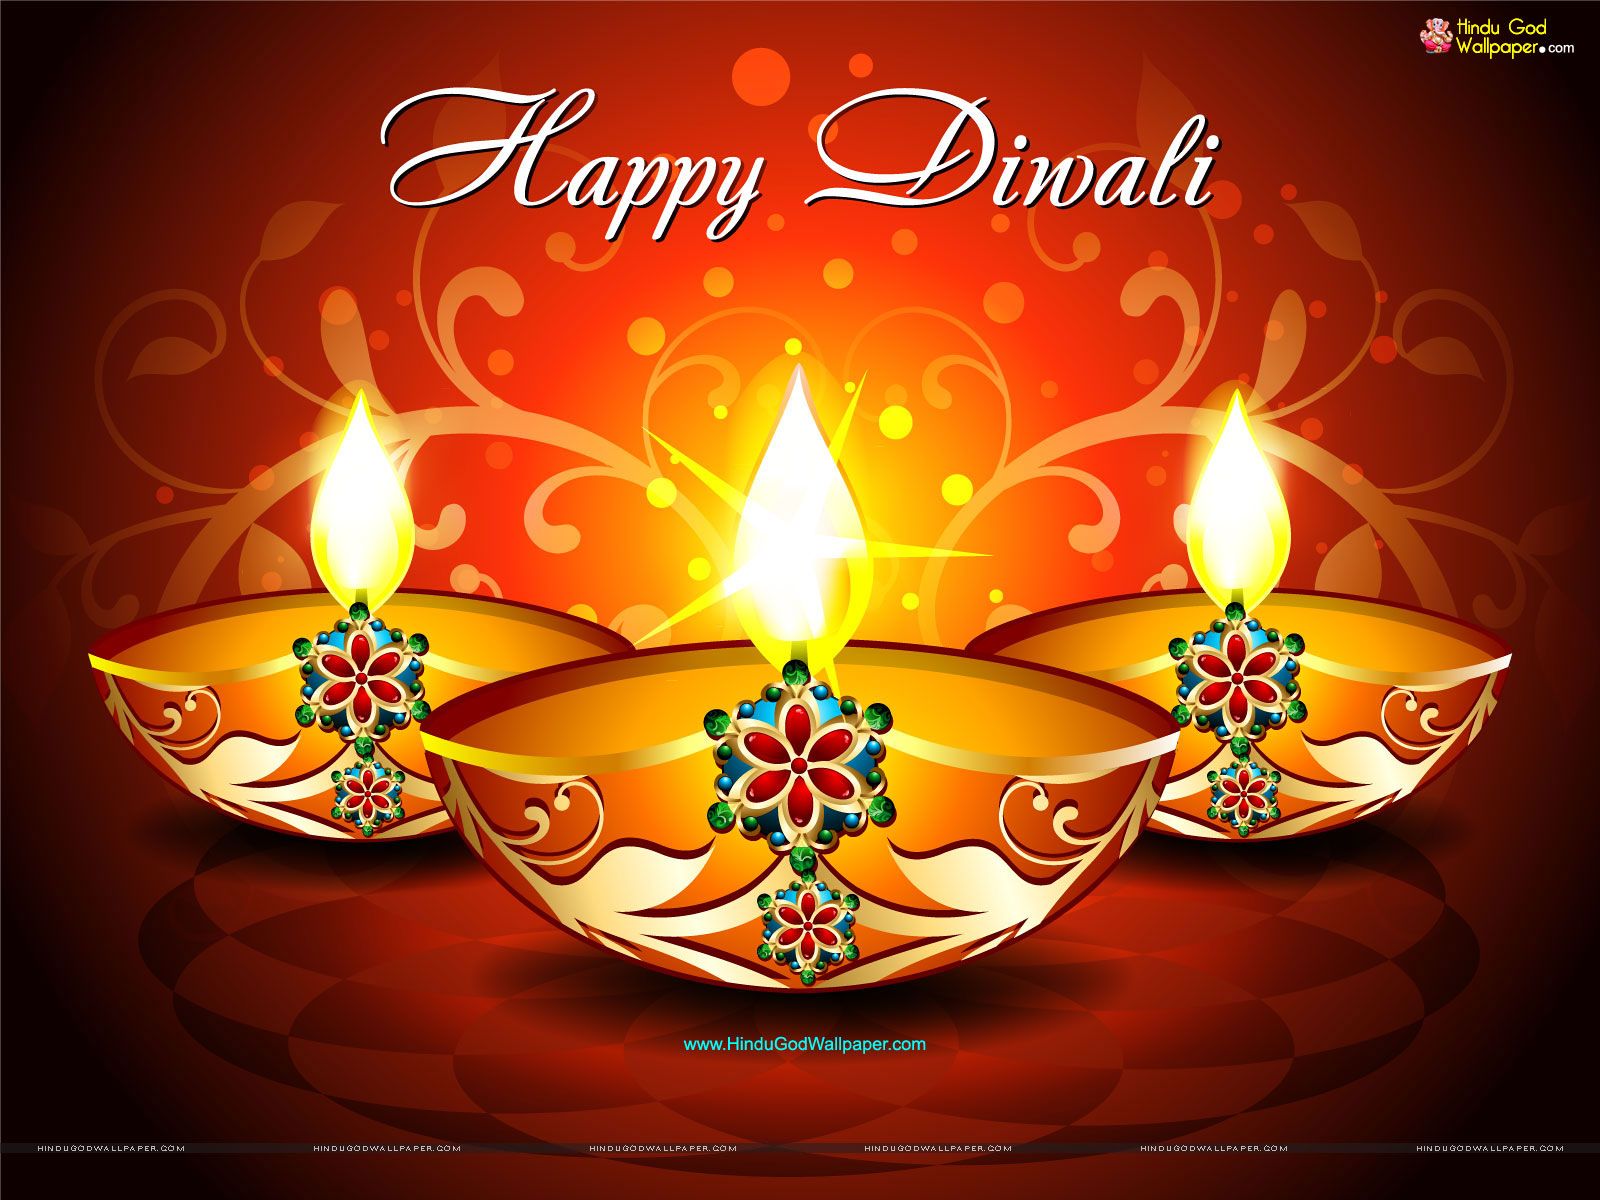 Happy Diwali Images Free - HD Wallpaper 